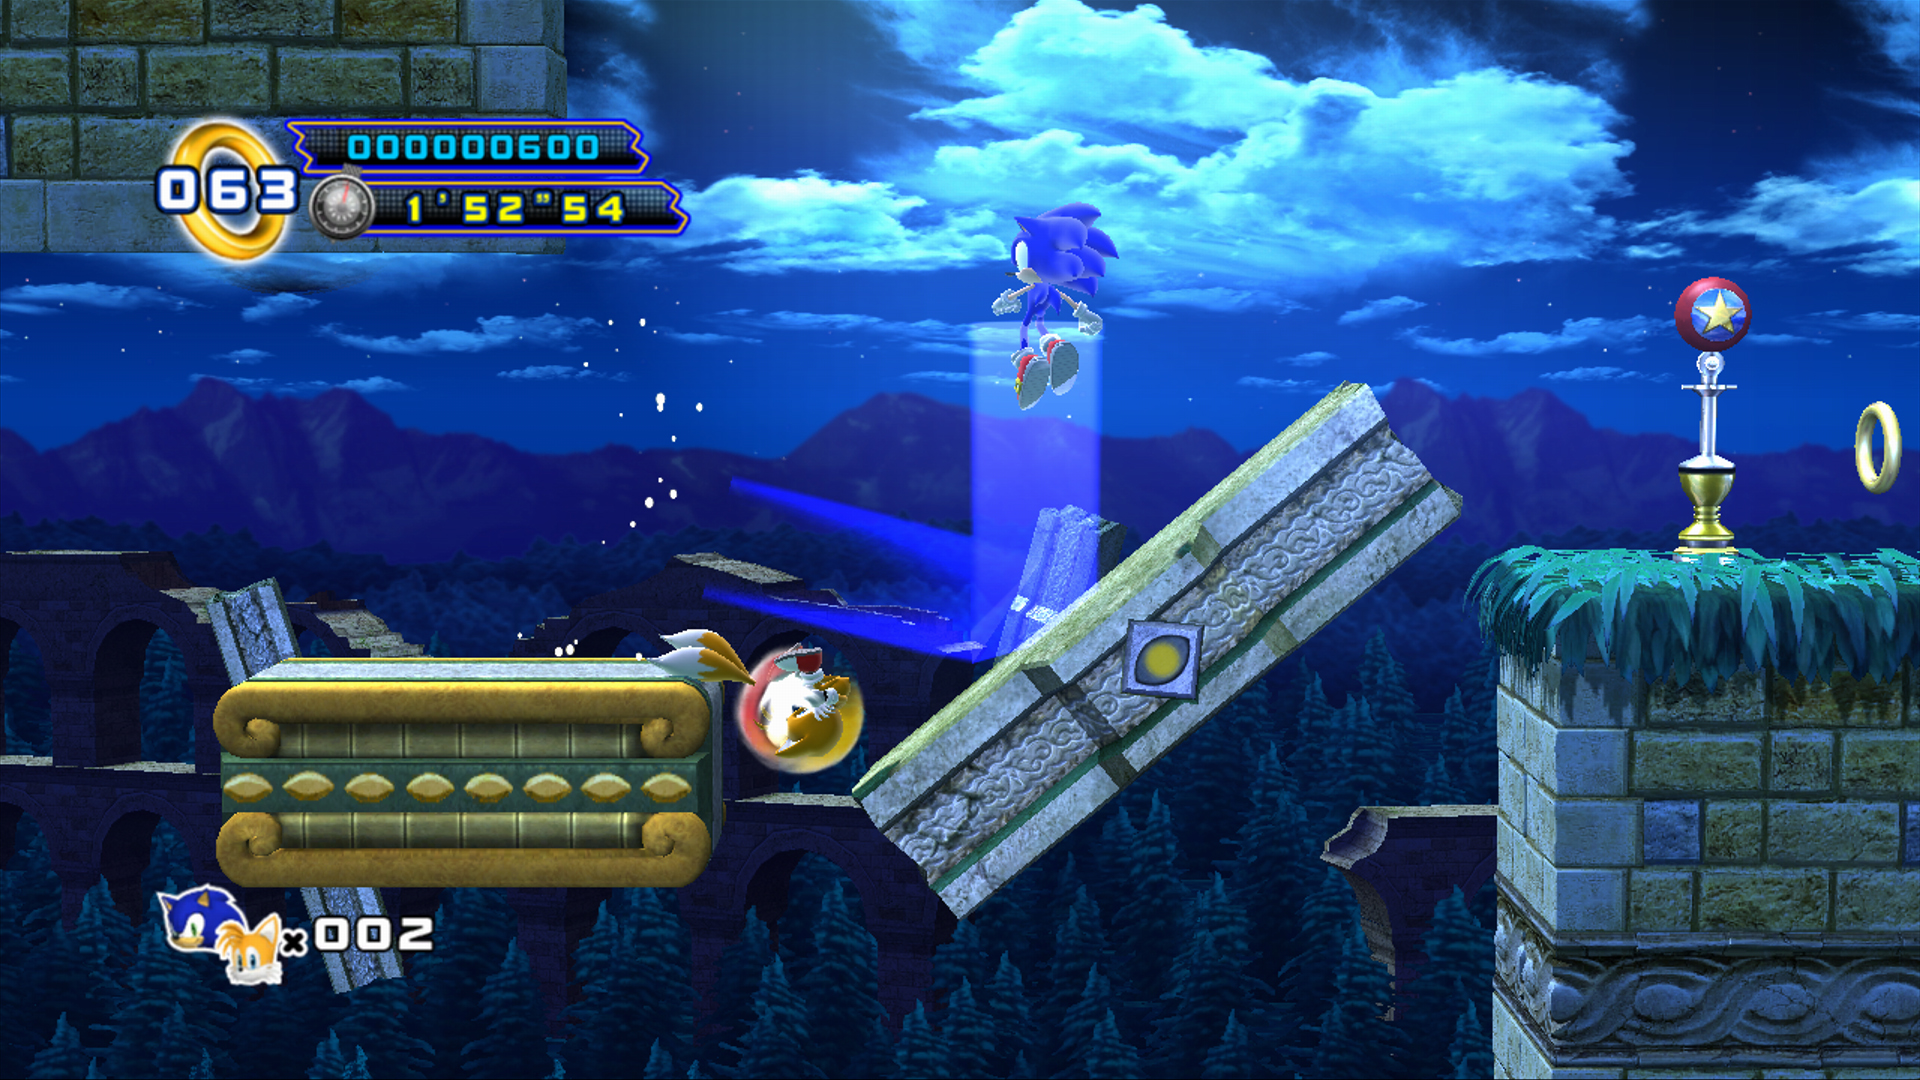 Obrázky ze Sonic the Hedgehog 4: Episode 2 62114